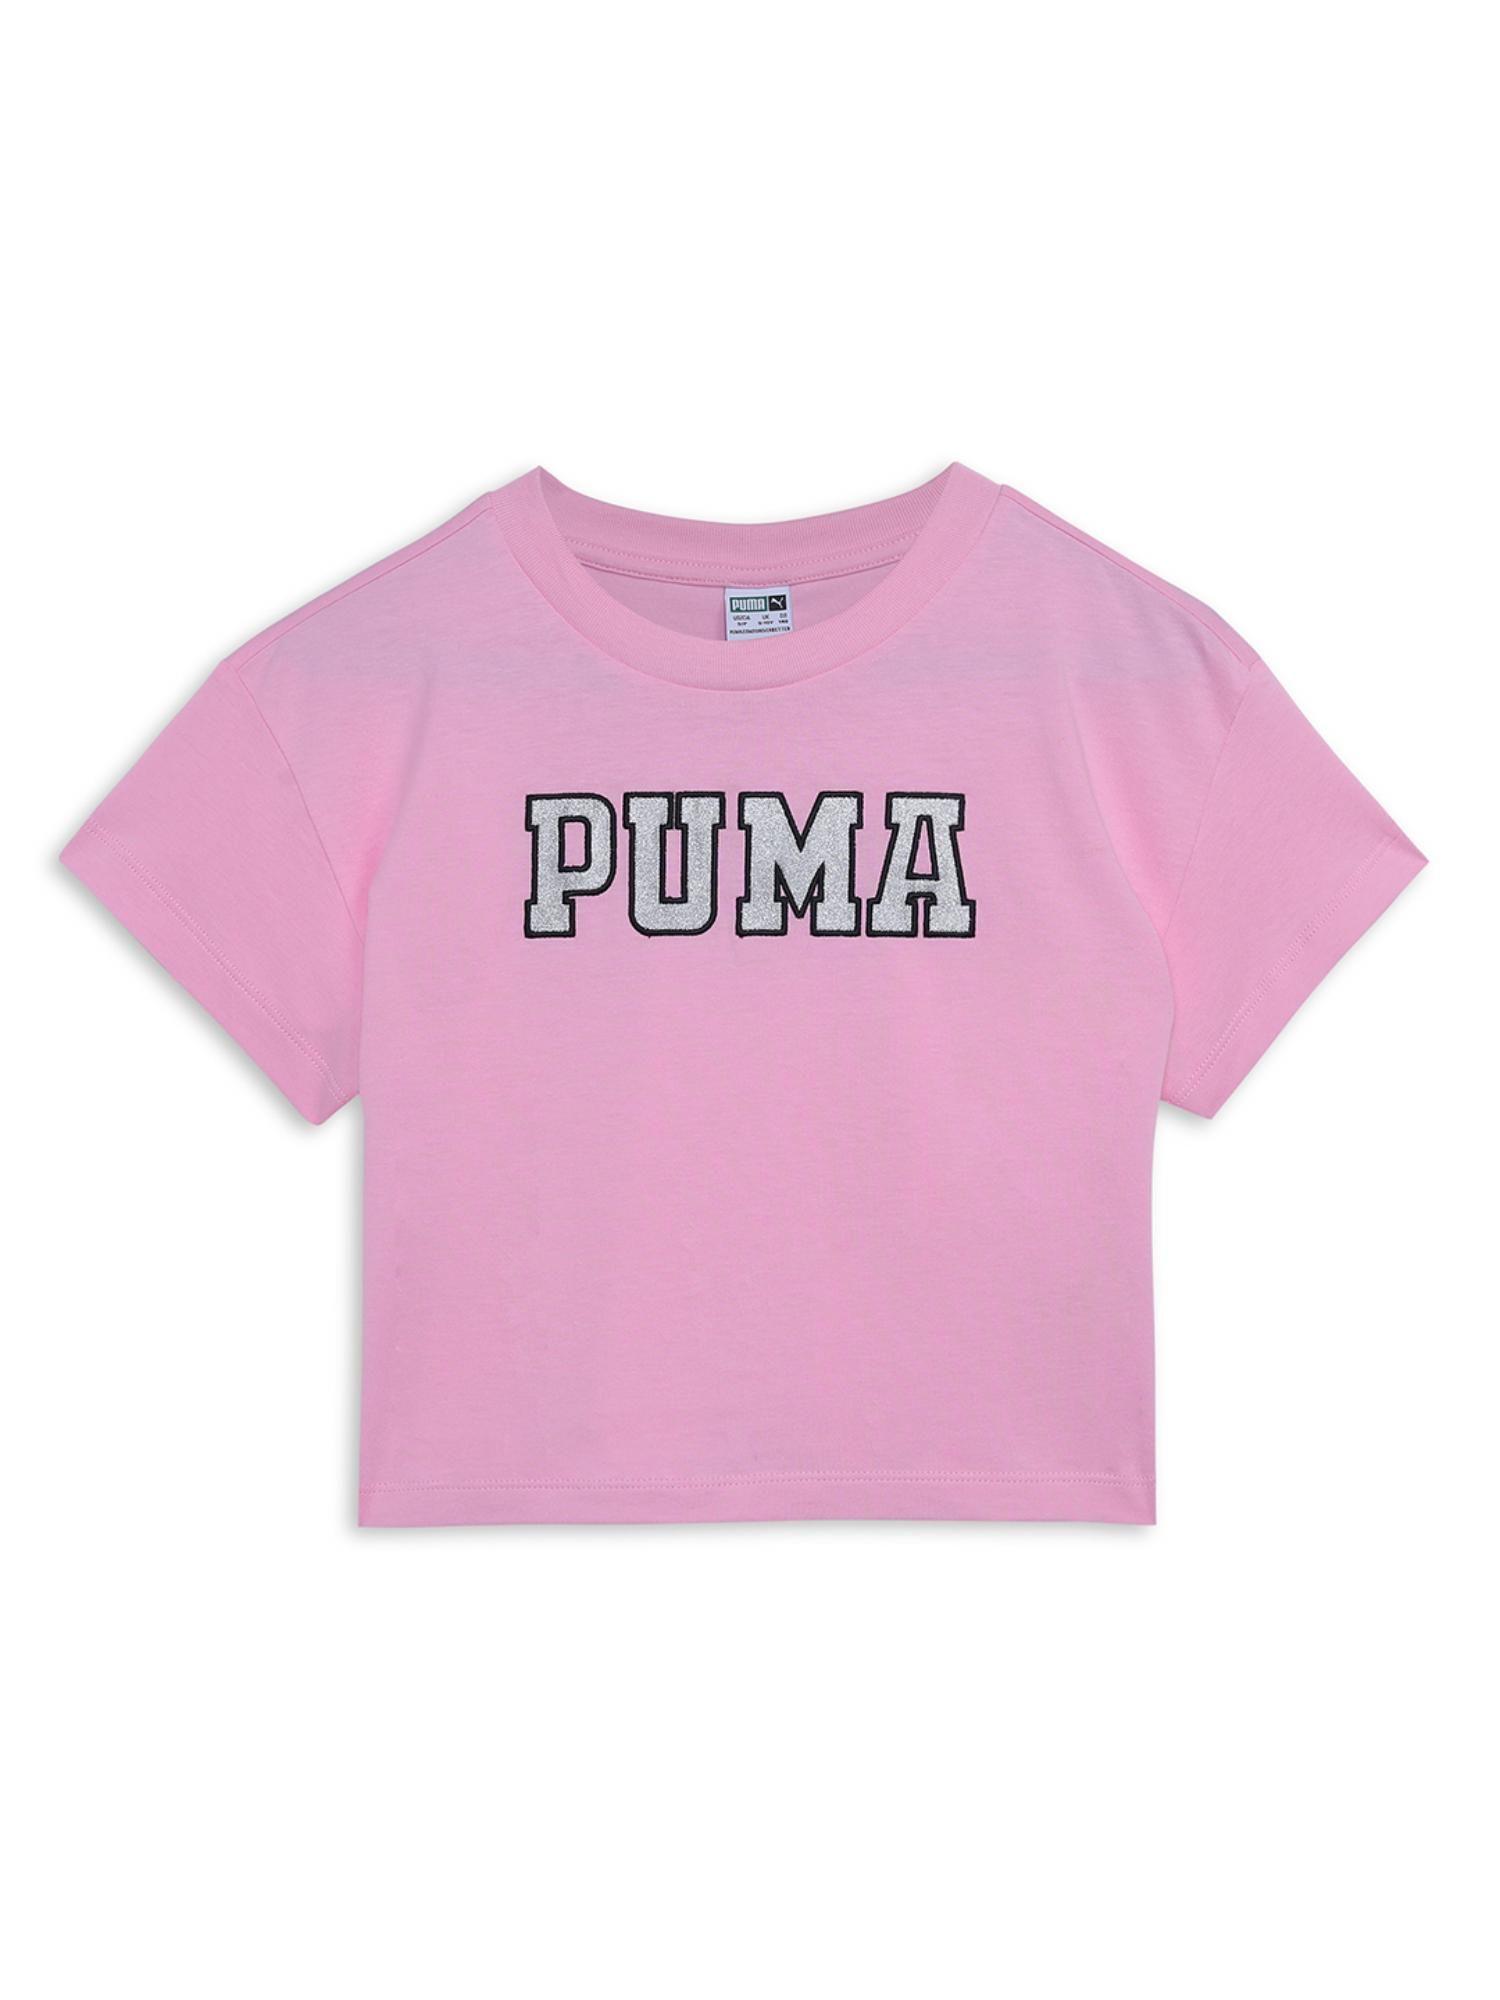 graphics dancing queen girls pink t-shirt